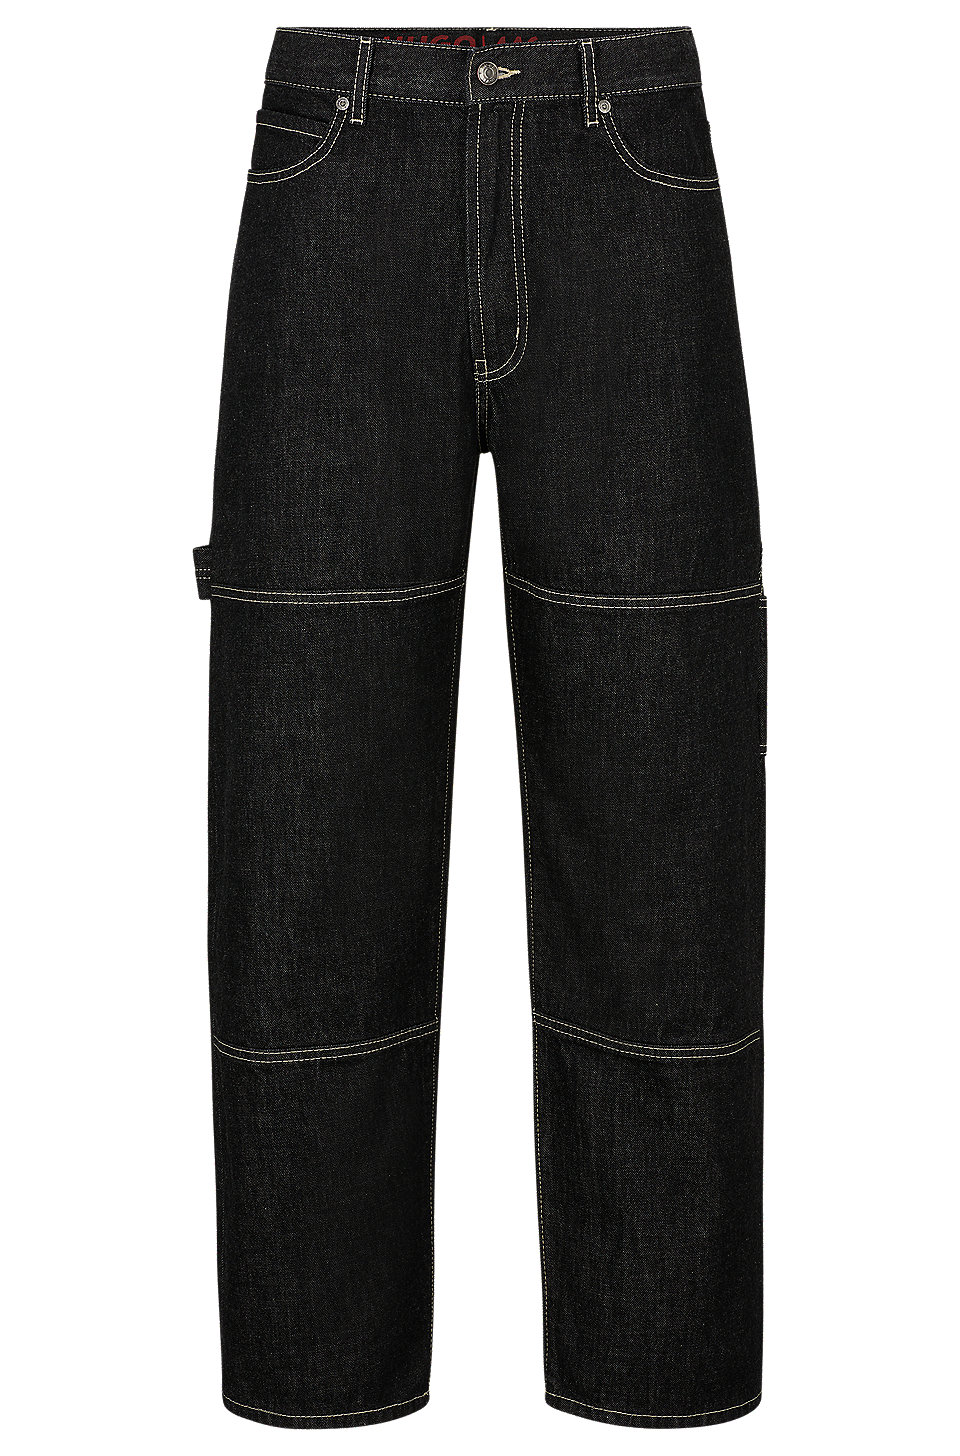 HUGO - Loose-fit jeans in black Japanese rigid denim